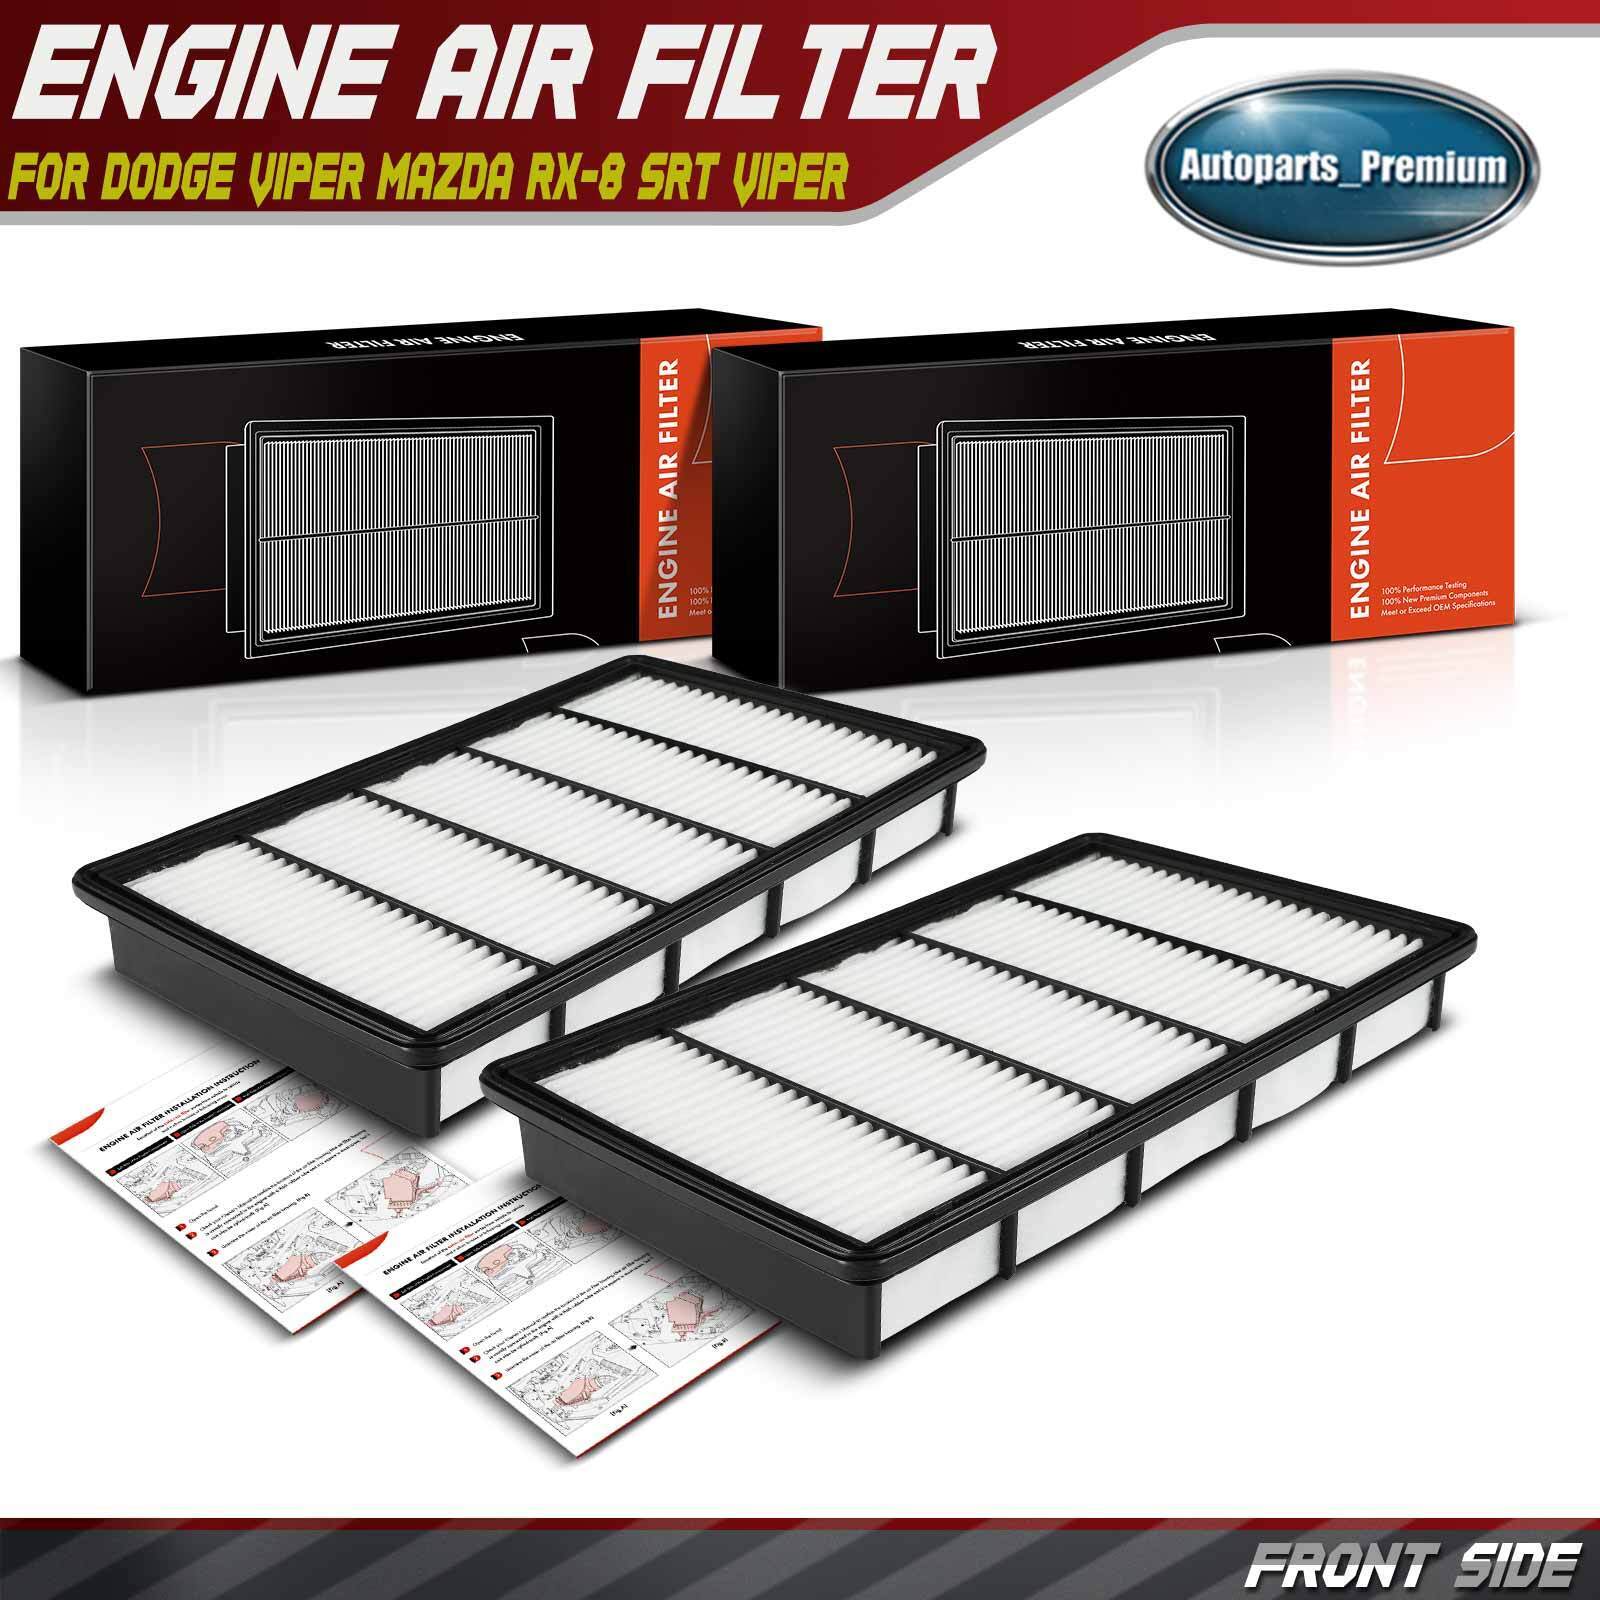 2x Engine Air Filter for Dodge Viper 08-10 15-17 Mazda RX-8 2004-2011 SRT Viper